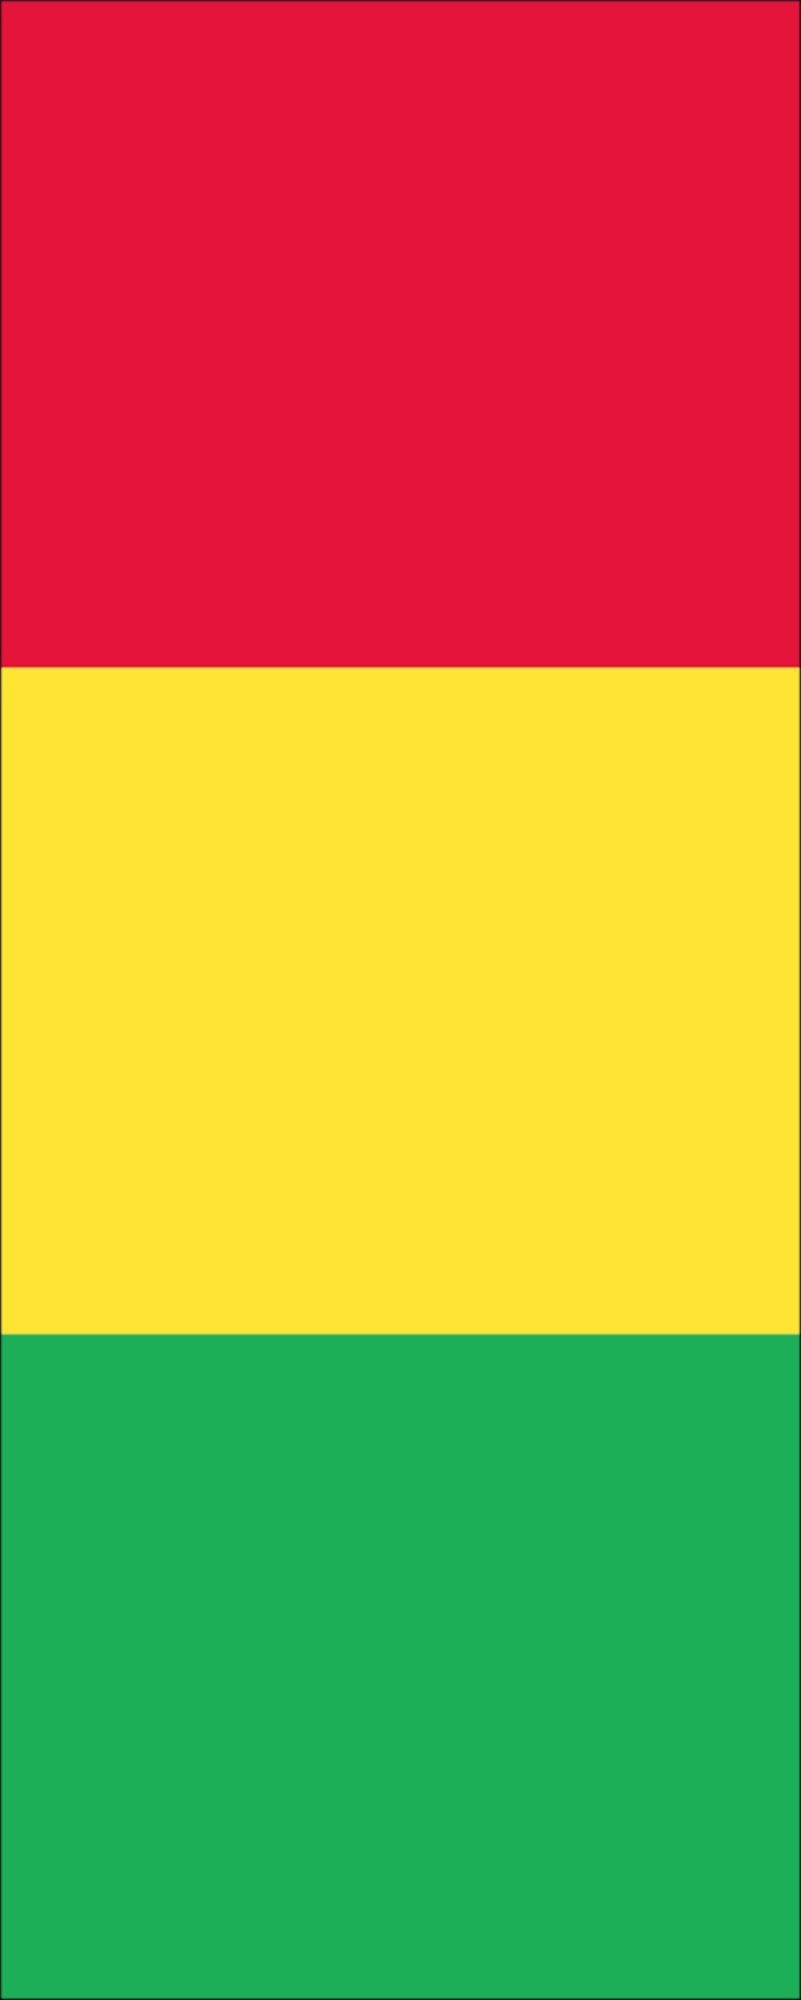 Guinea flaggenmeer Hochformat g/m² Flagge 160